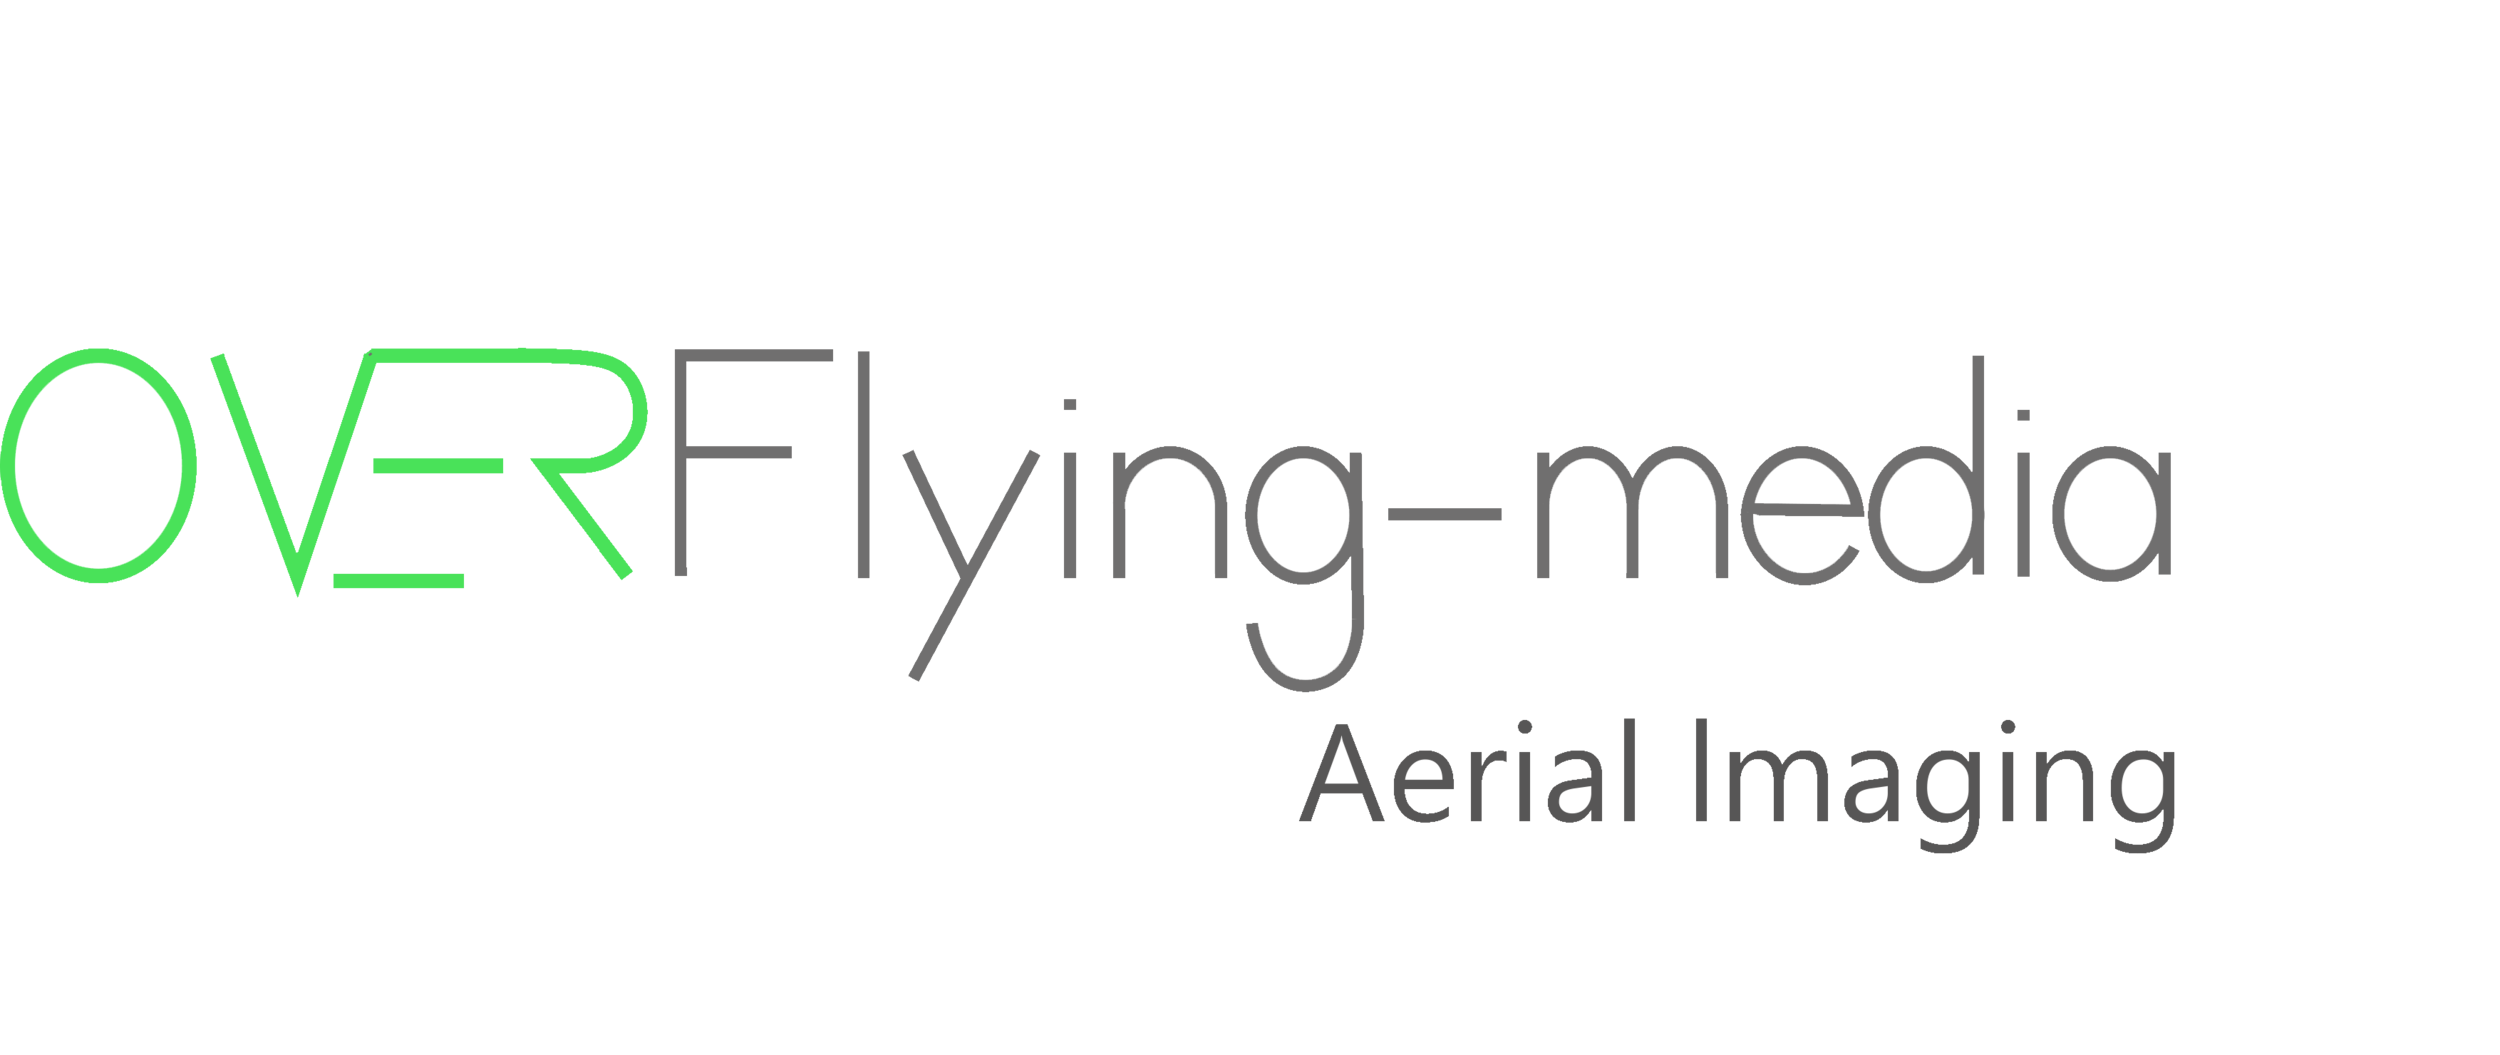 Overflying-media